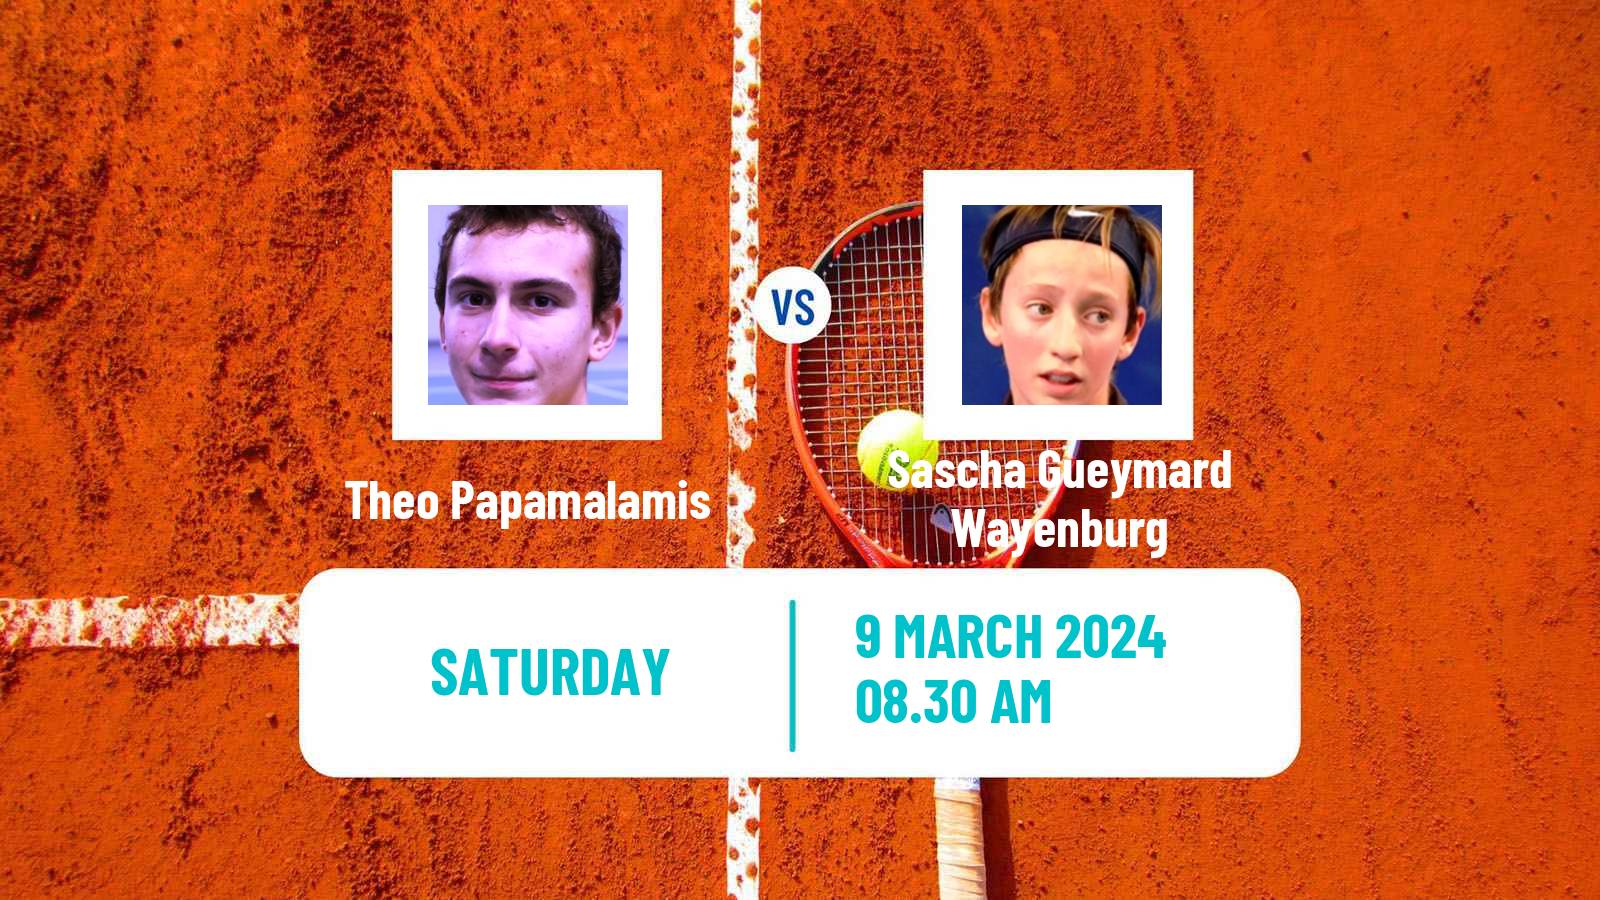 Tennis ITF M15 Poitiers Men Theo Papamalamis - Sascha Gueymard Wayenburg